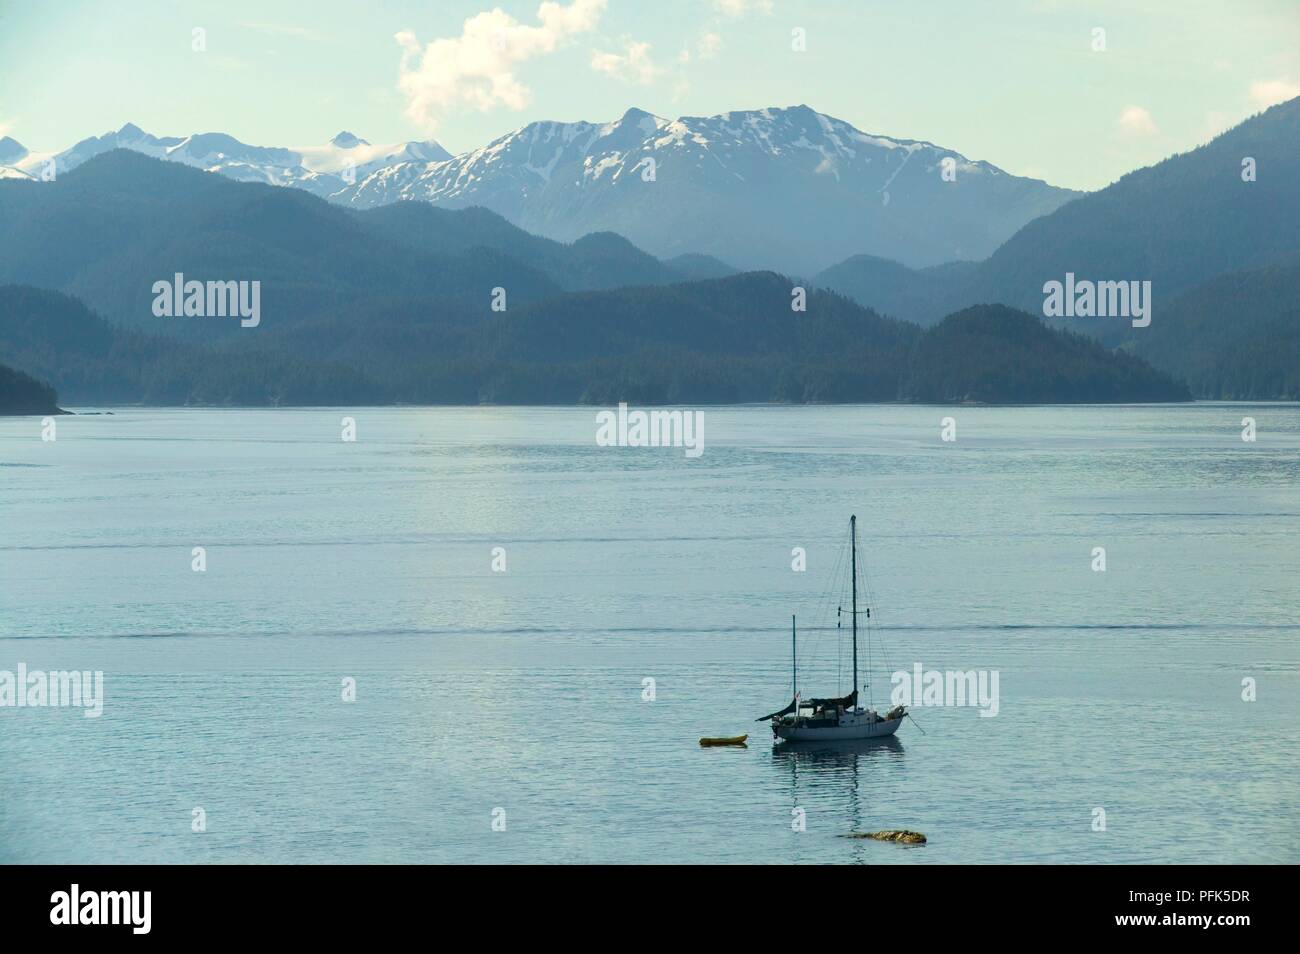 USA, Alaska, fishing boat off mountainous coast Stock Photo